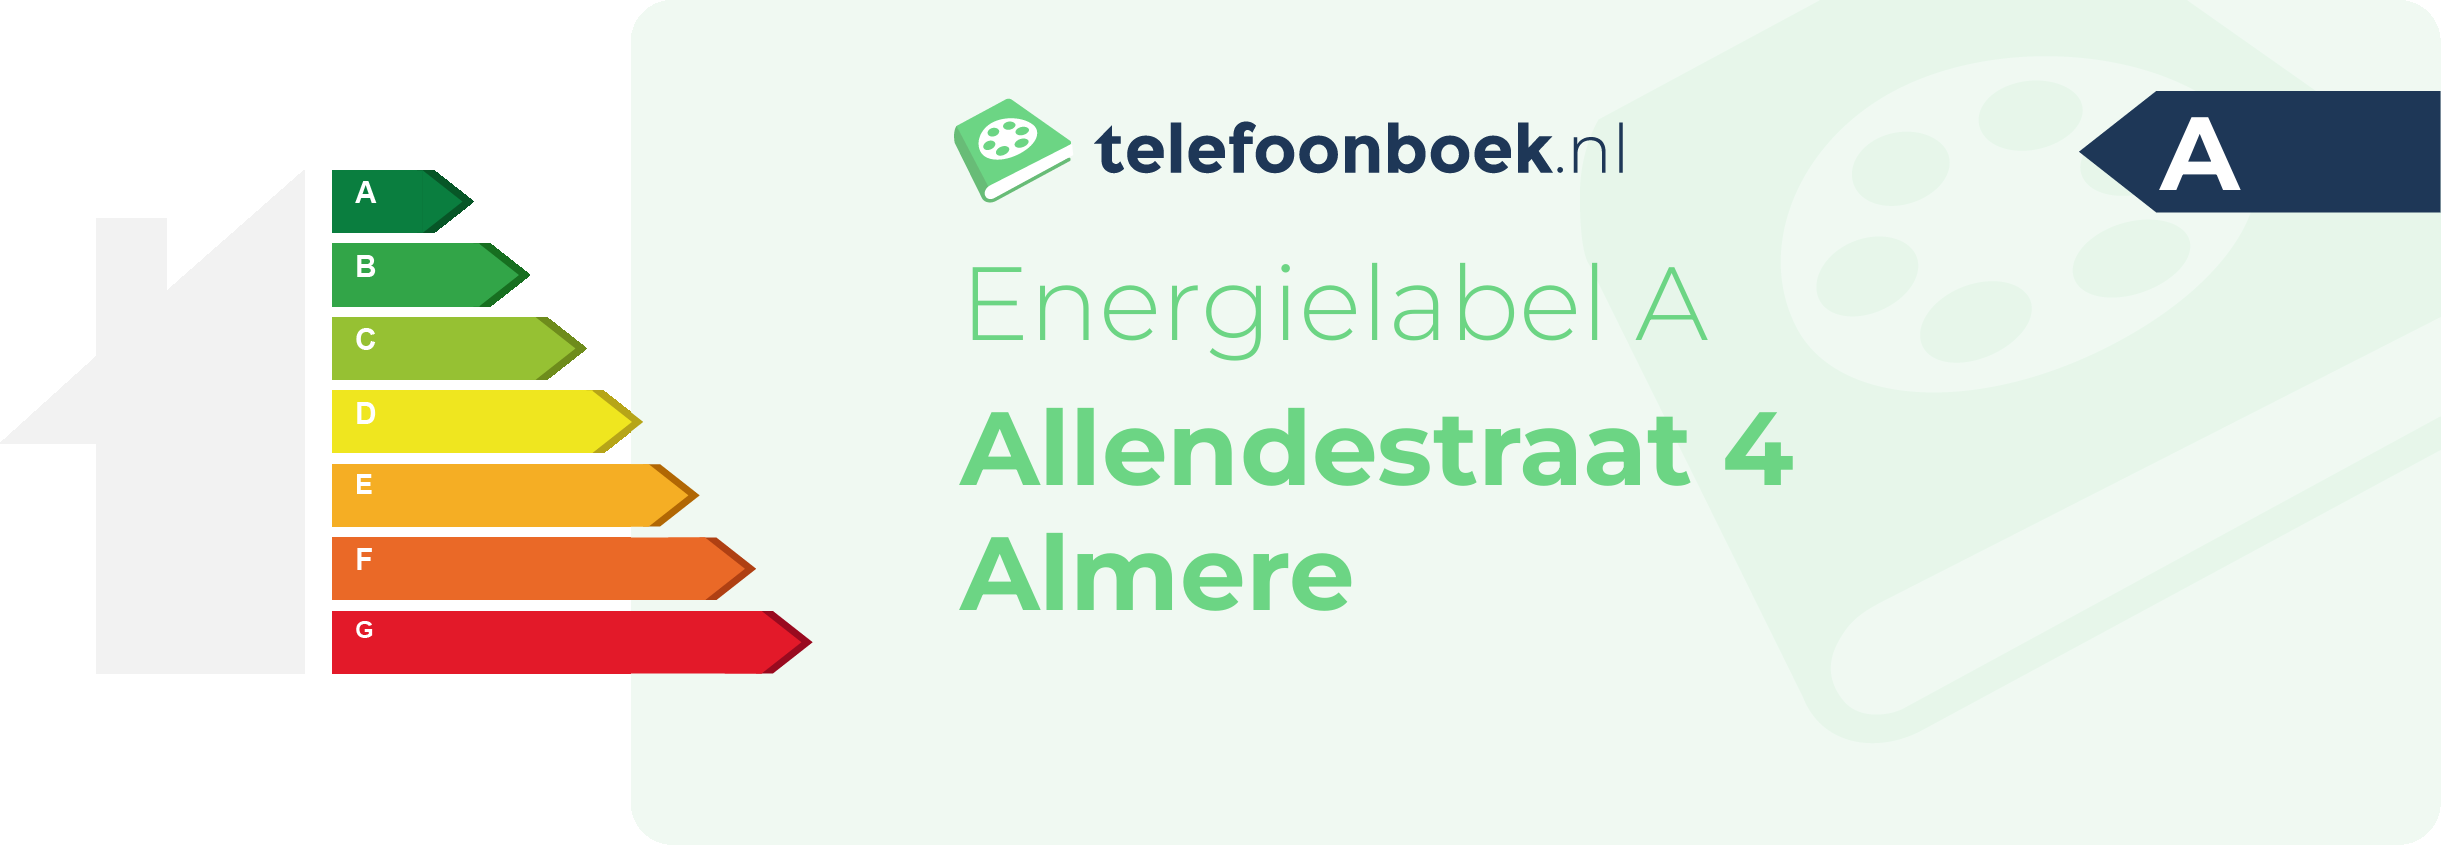 Energielabel Allendestraat 4 Almere